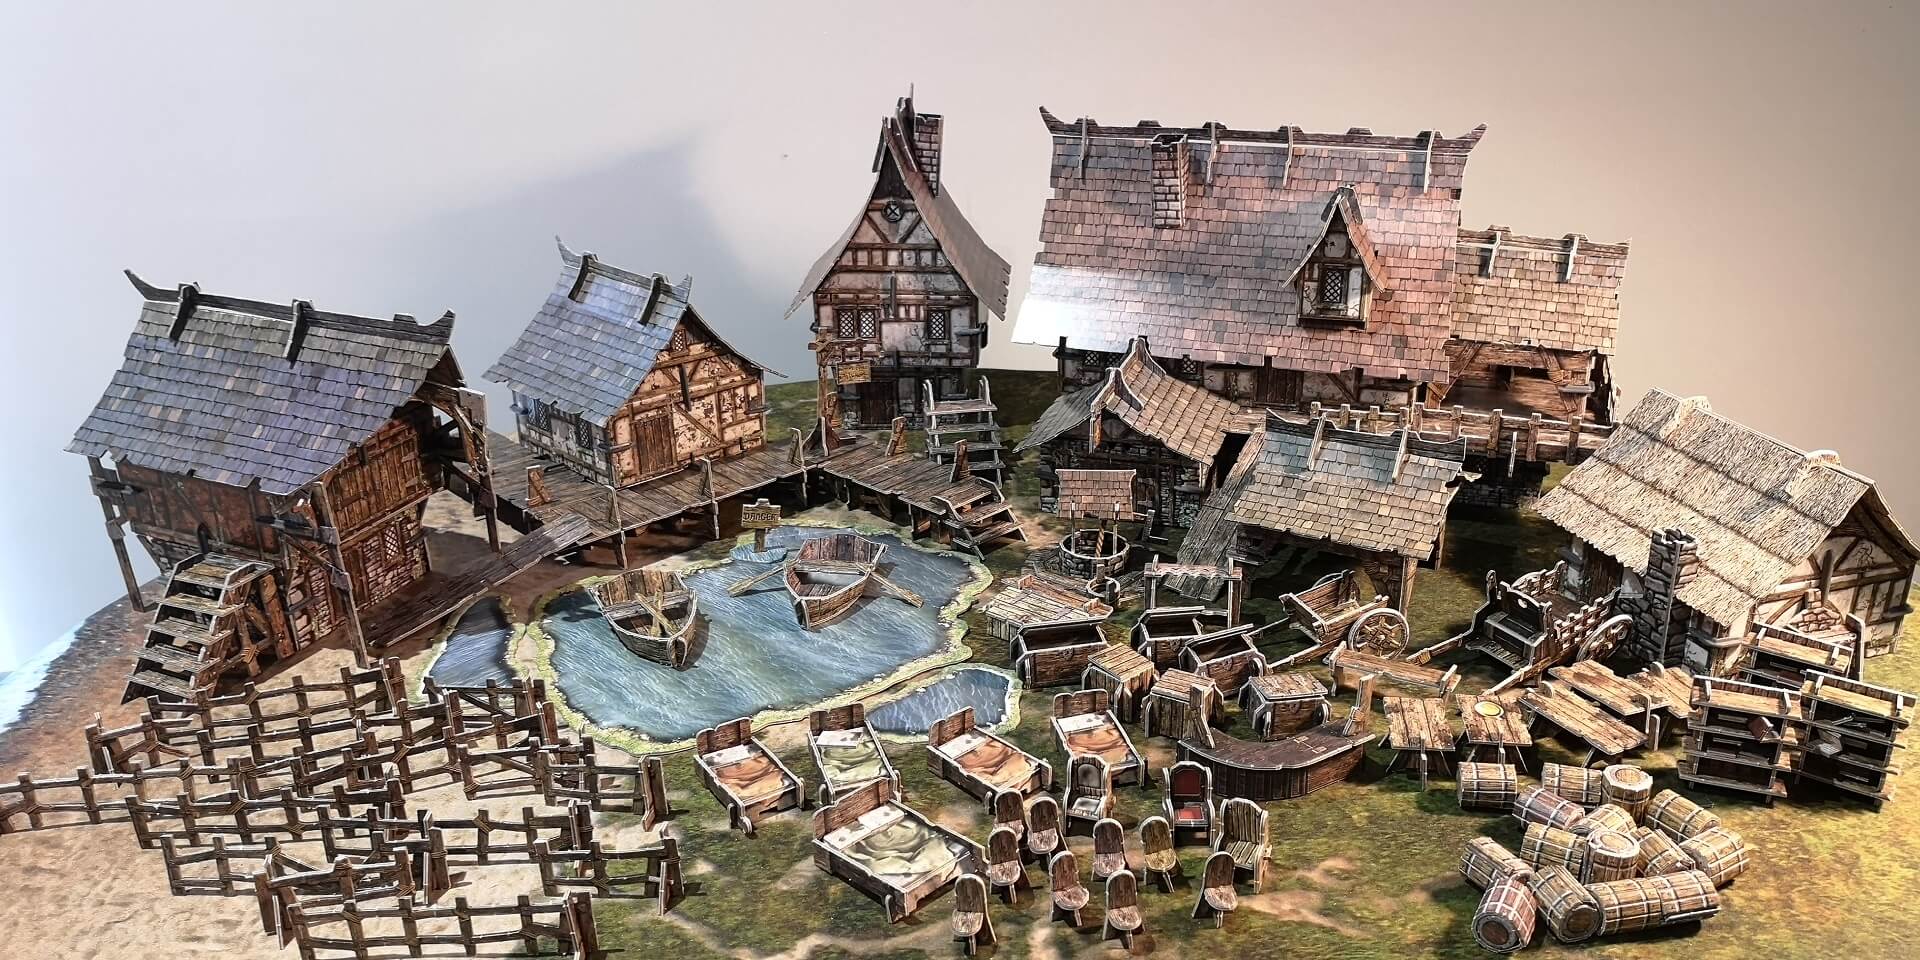 Battle Systems Fantasy Village.